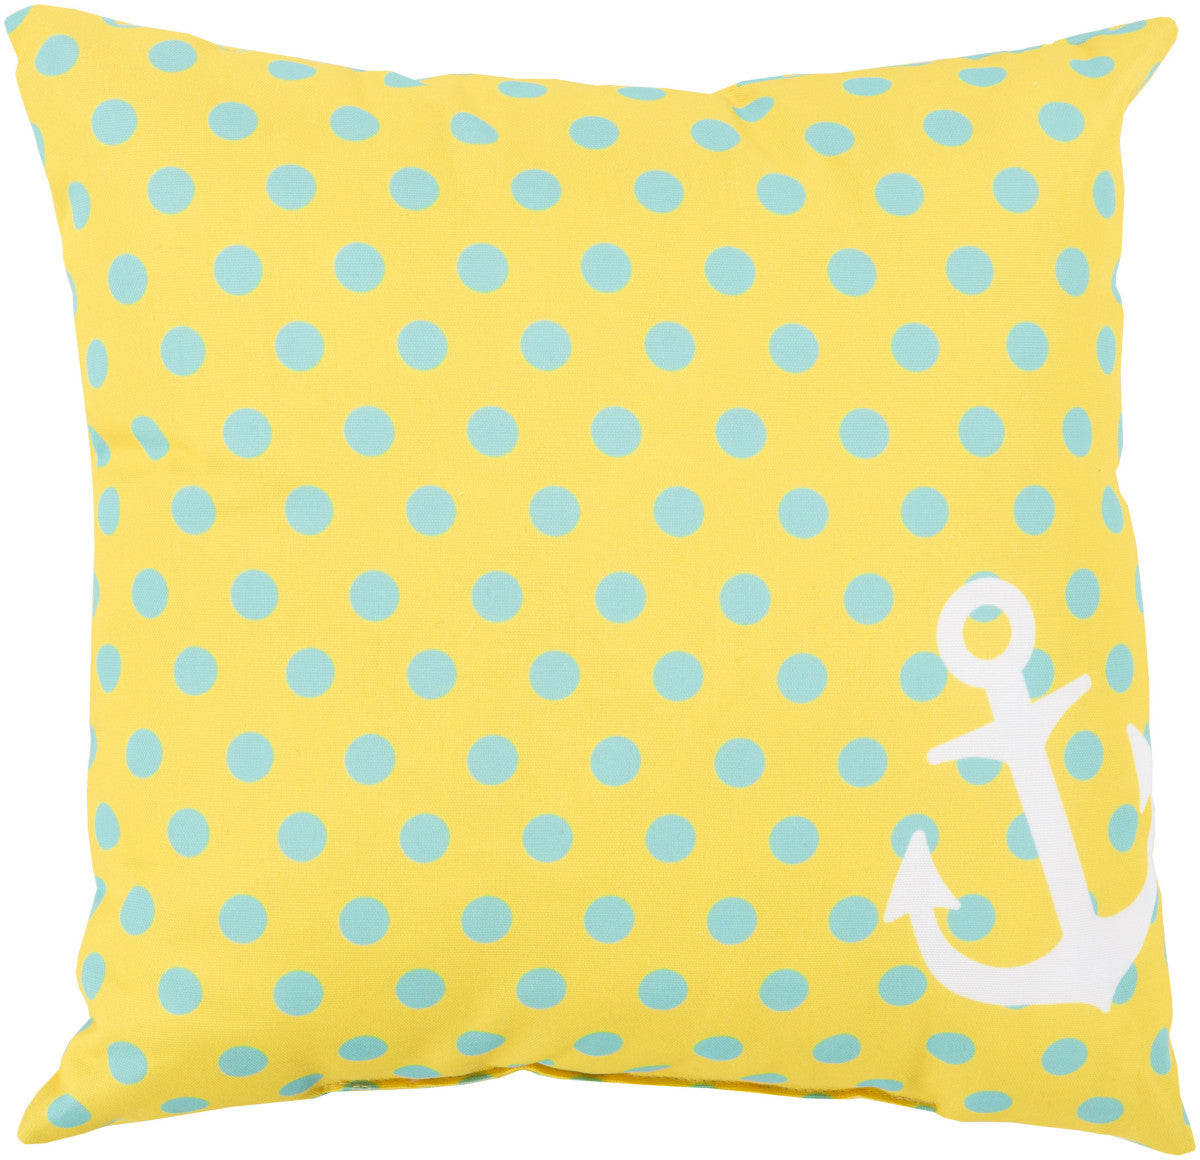 Surya Rain Anchored in Polka Dots RG-123 Pillow